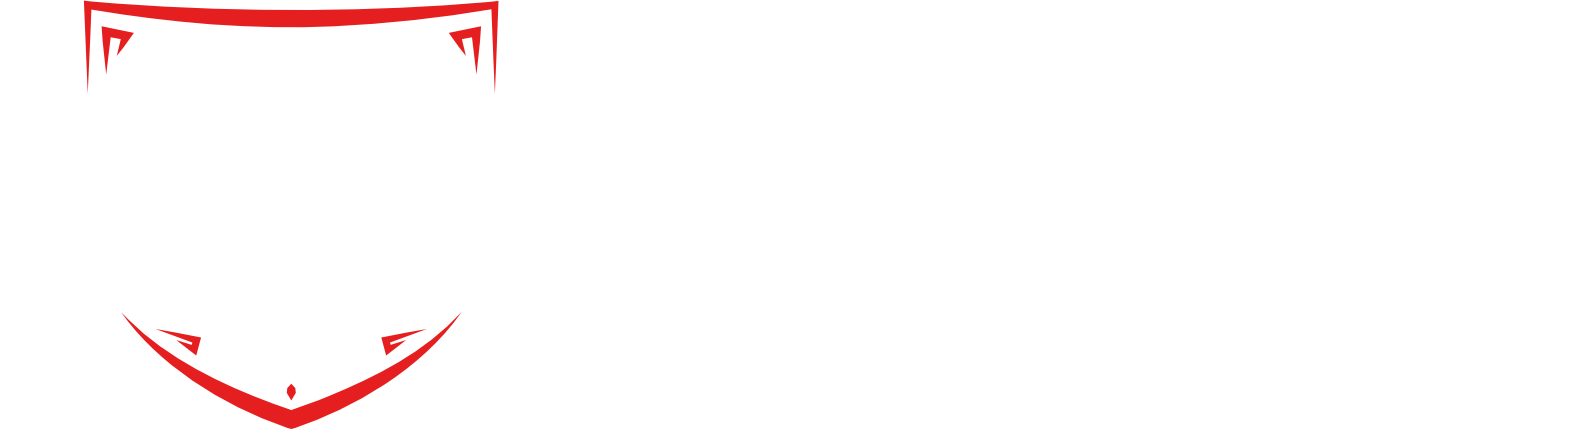 Garáže black logo